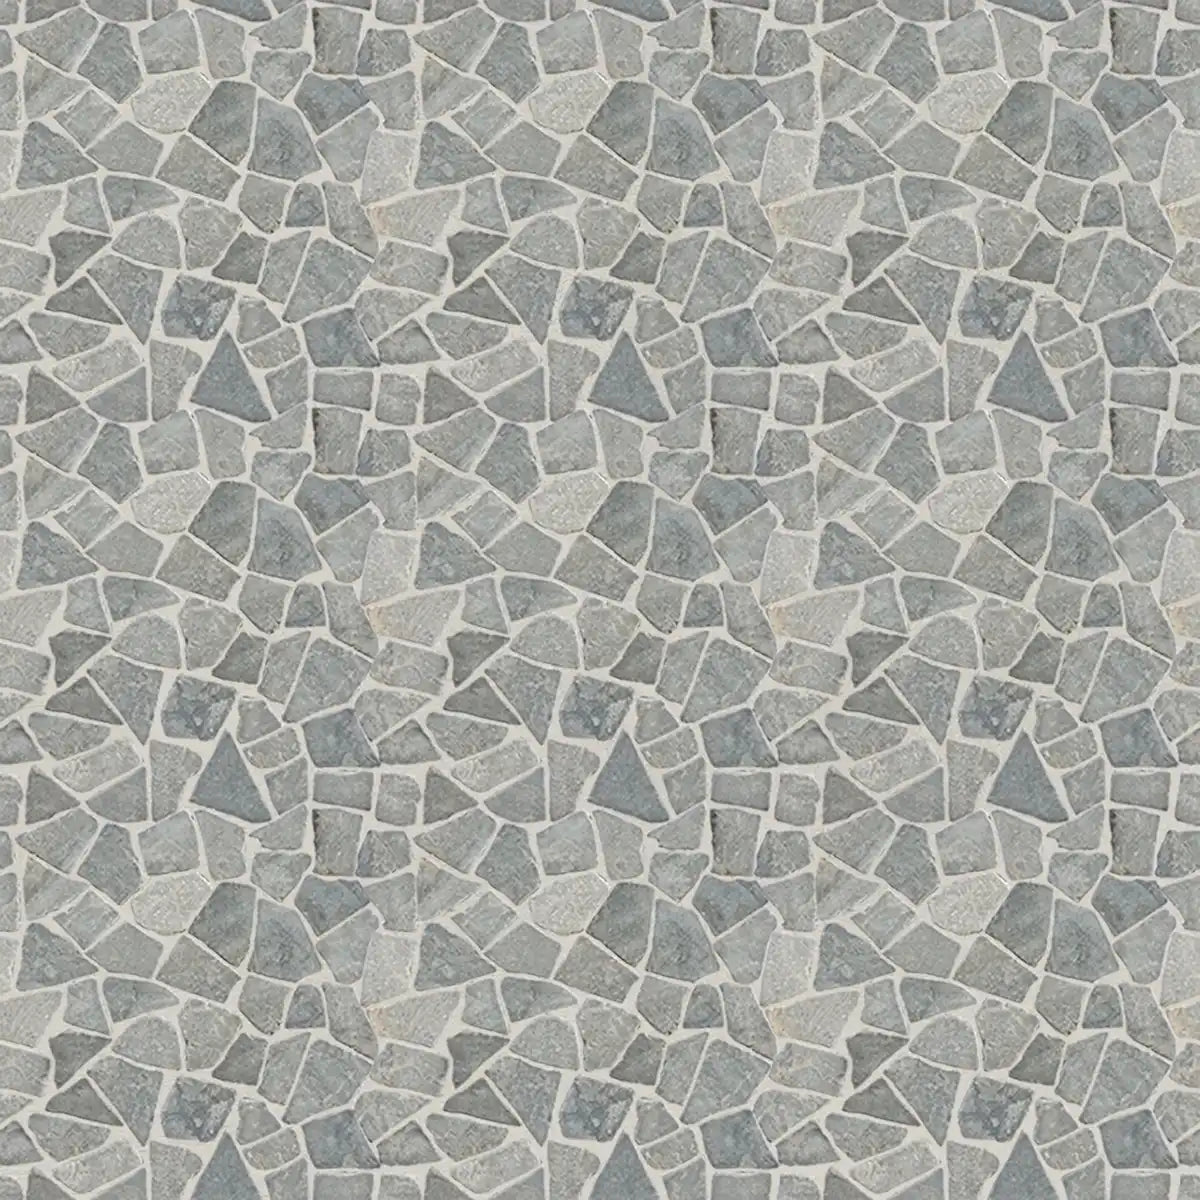 Mosaic tile light grey marble irregular for bathroom